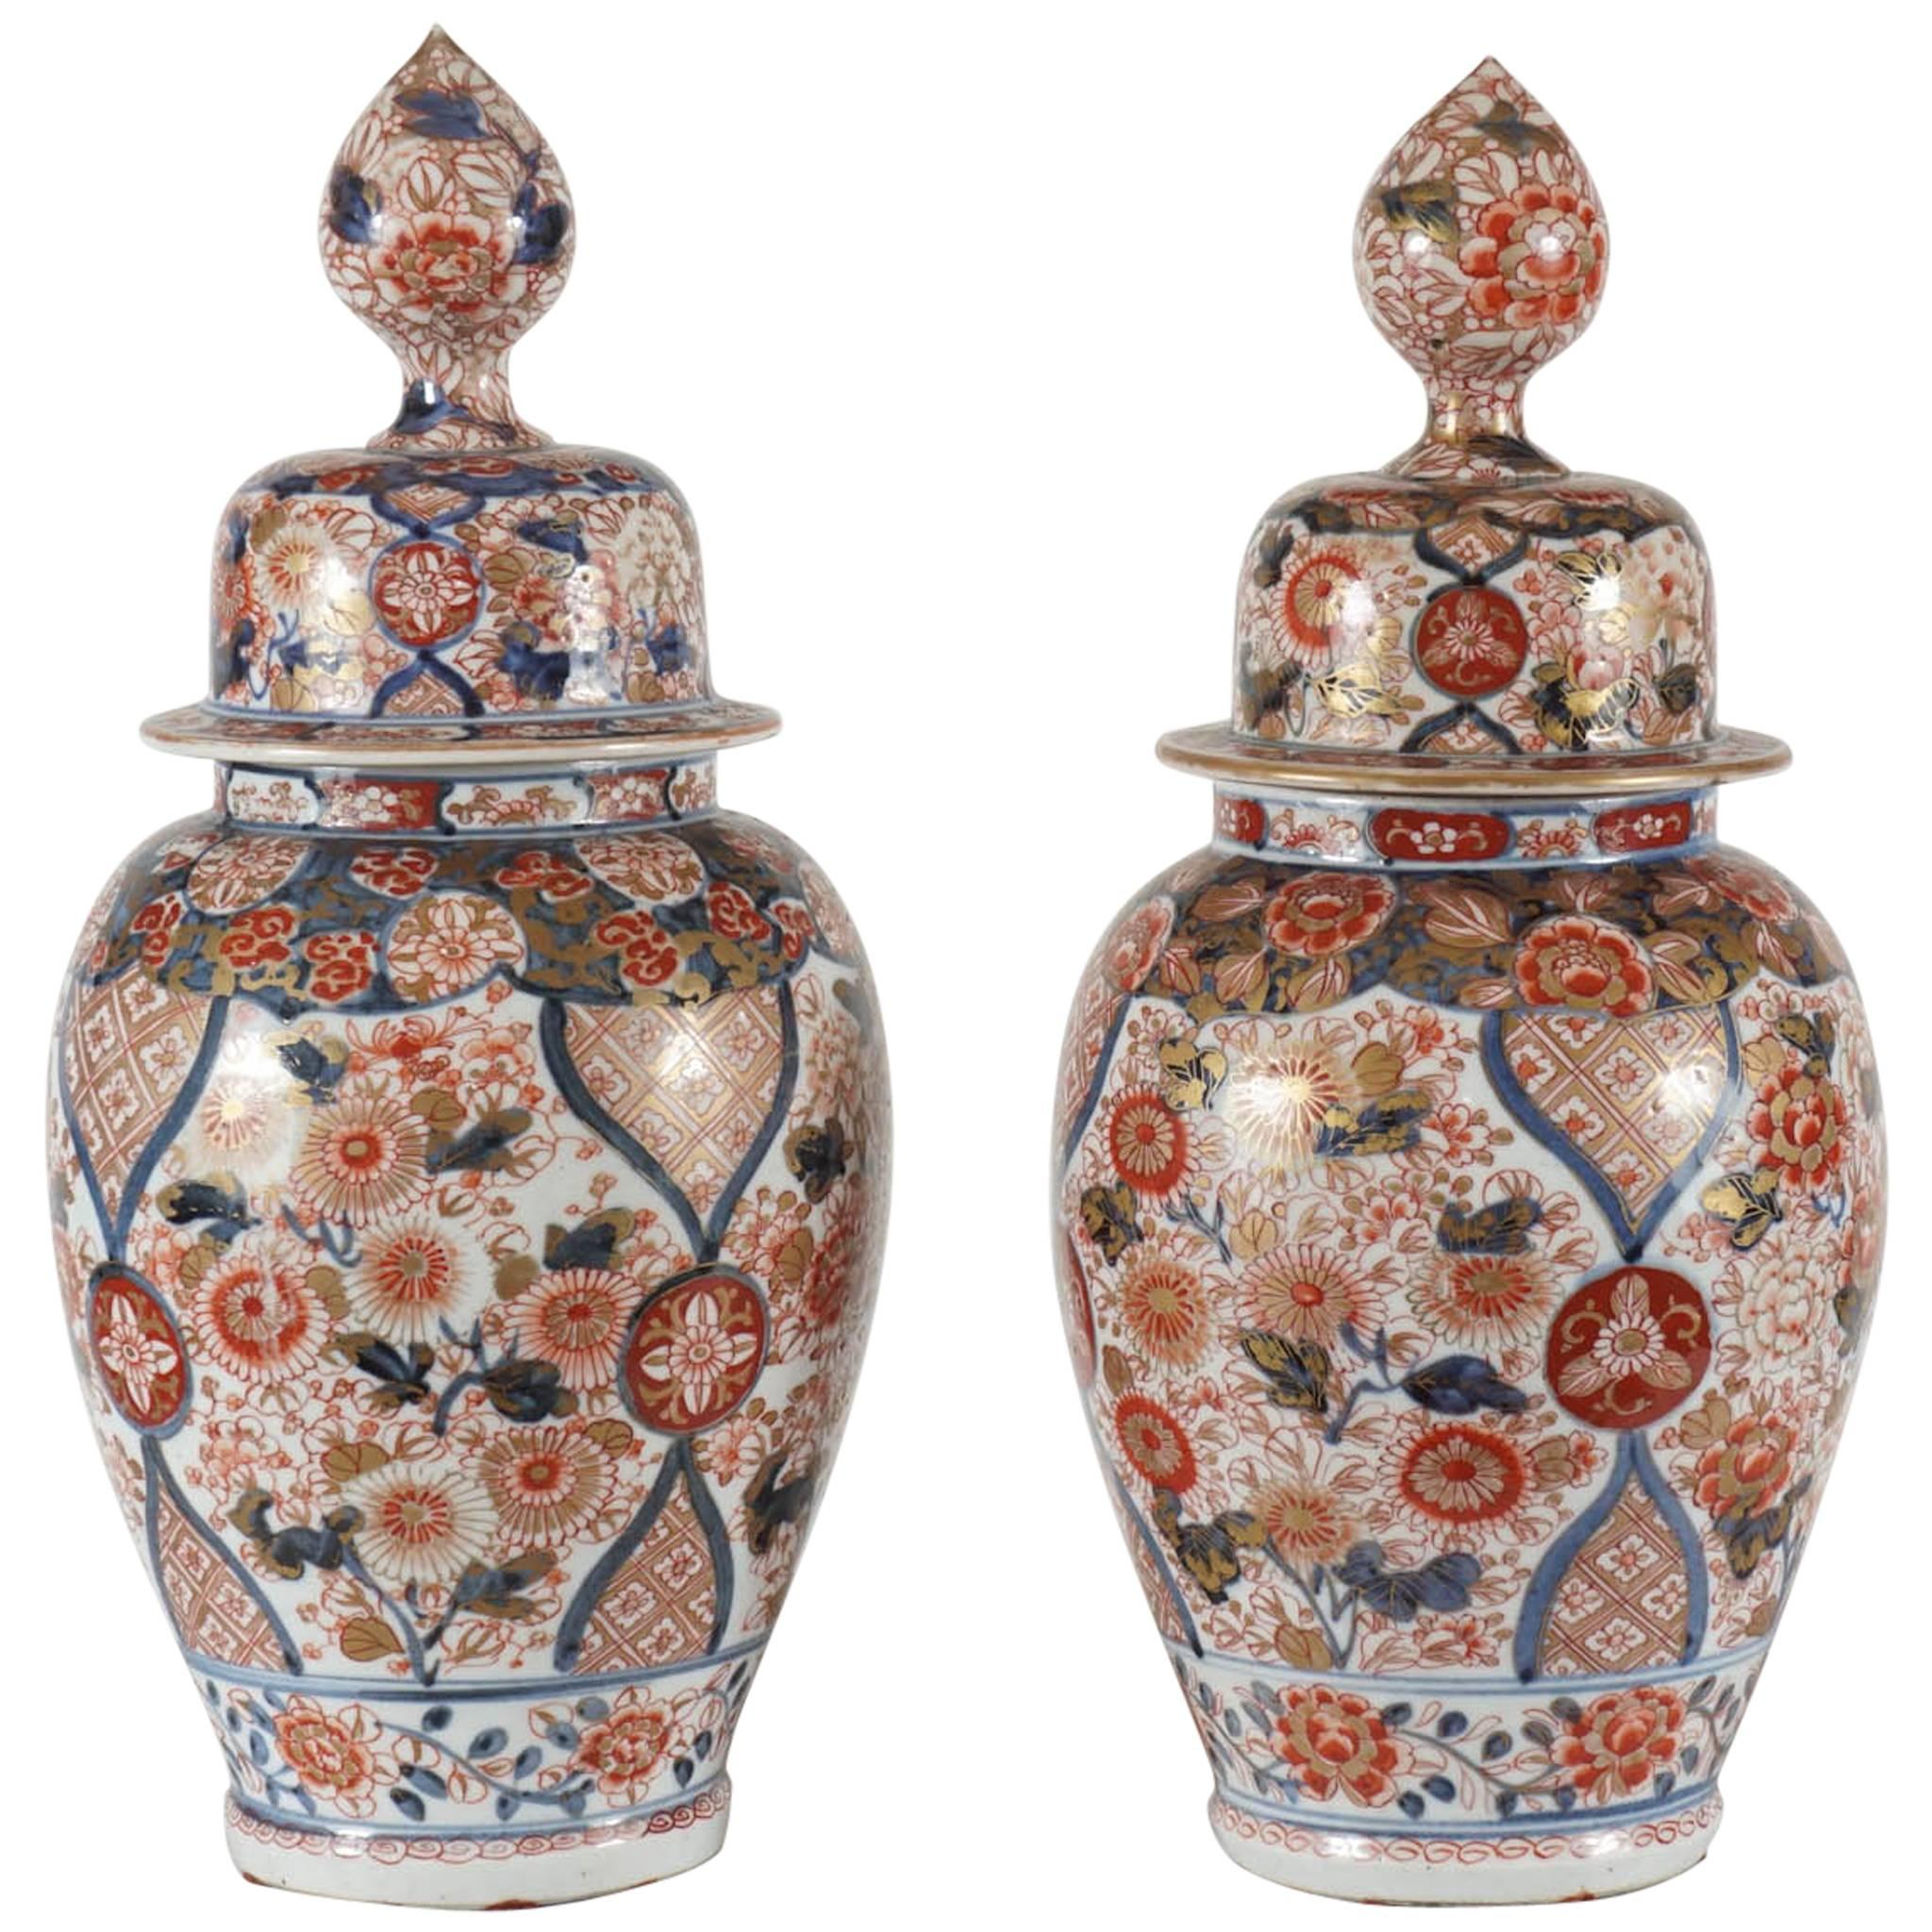 Pair of Edo Style Imari Porcelain Covered Jars, Japan, circa 1880